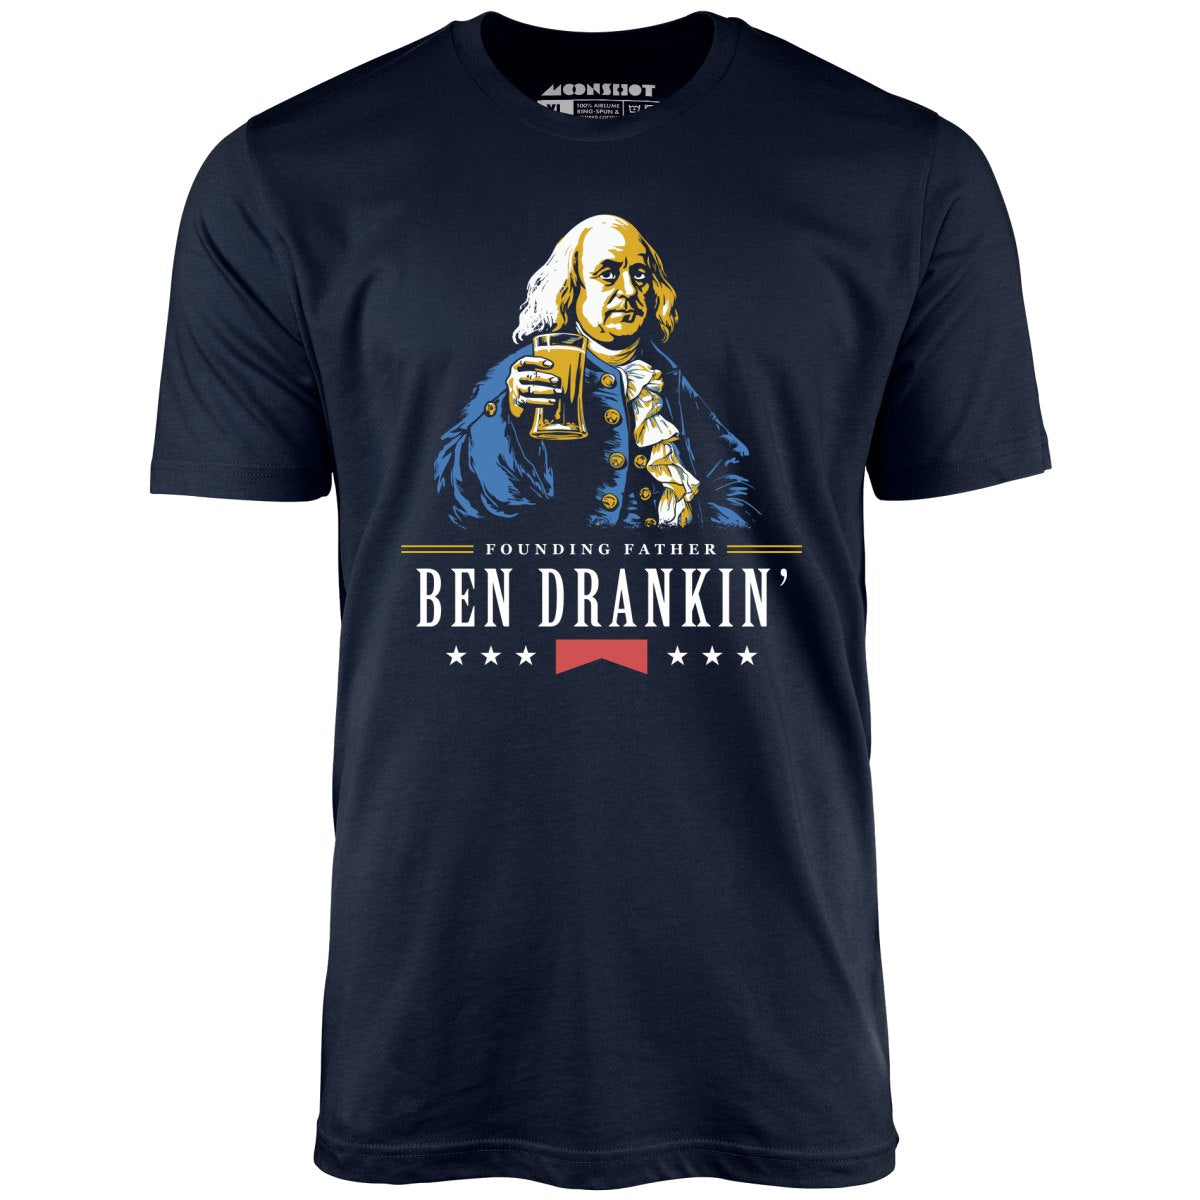 Ben Drankin' Founding Father - Unisex T-Shirt